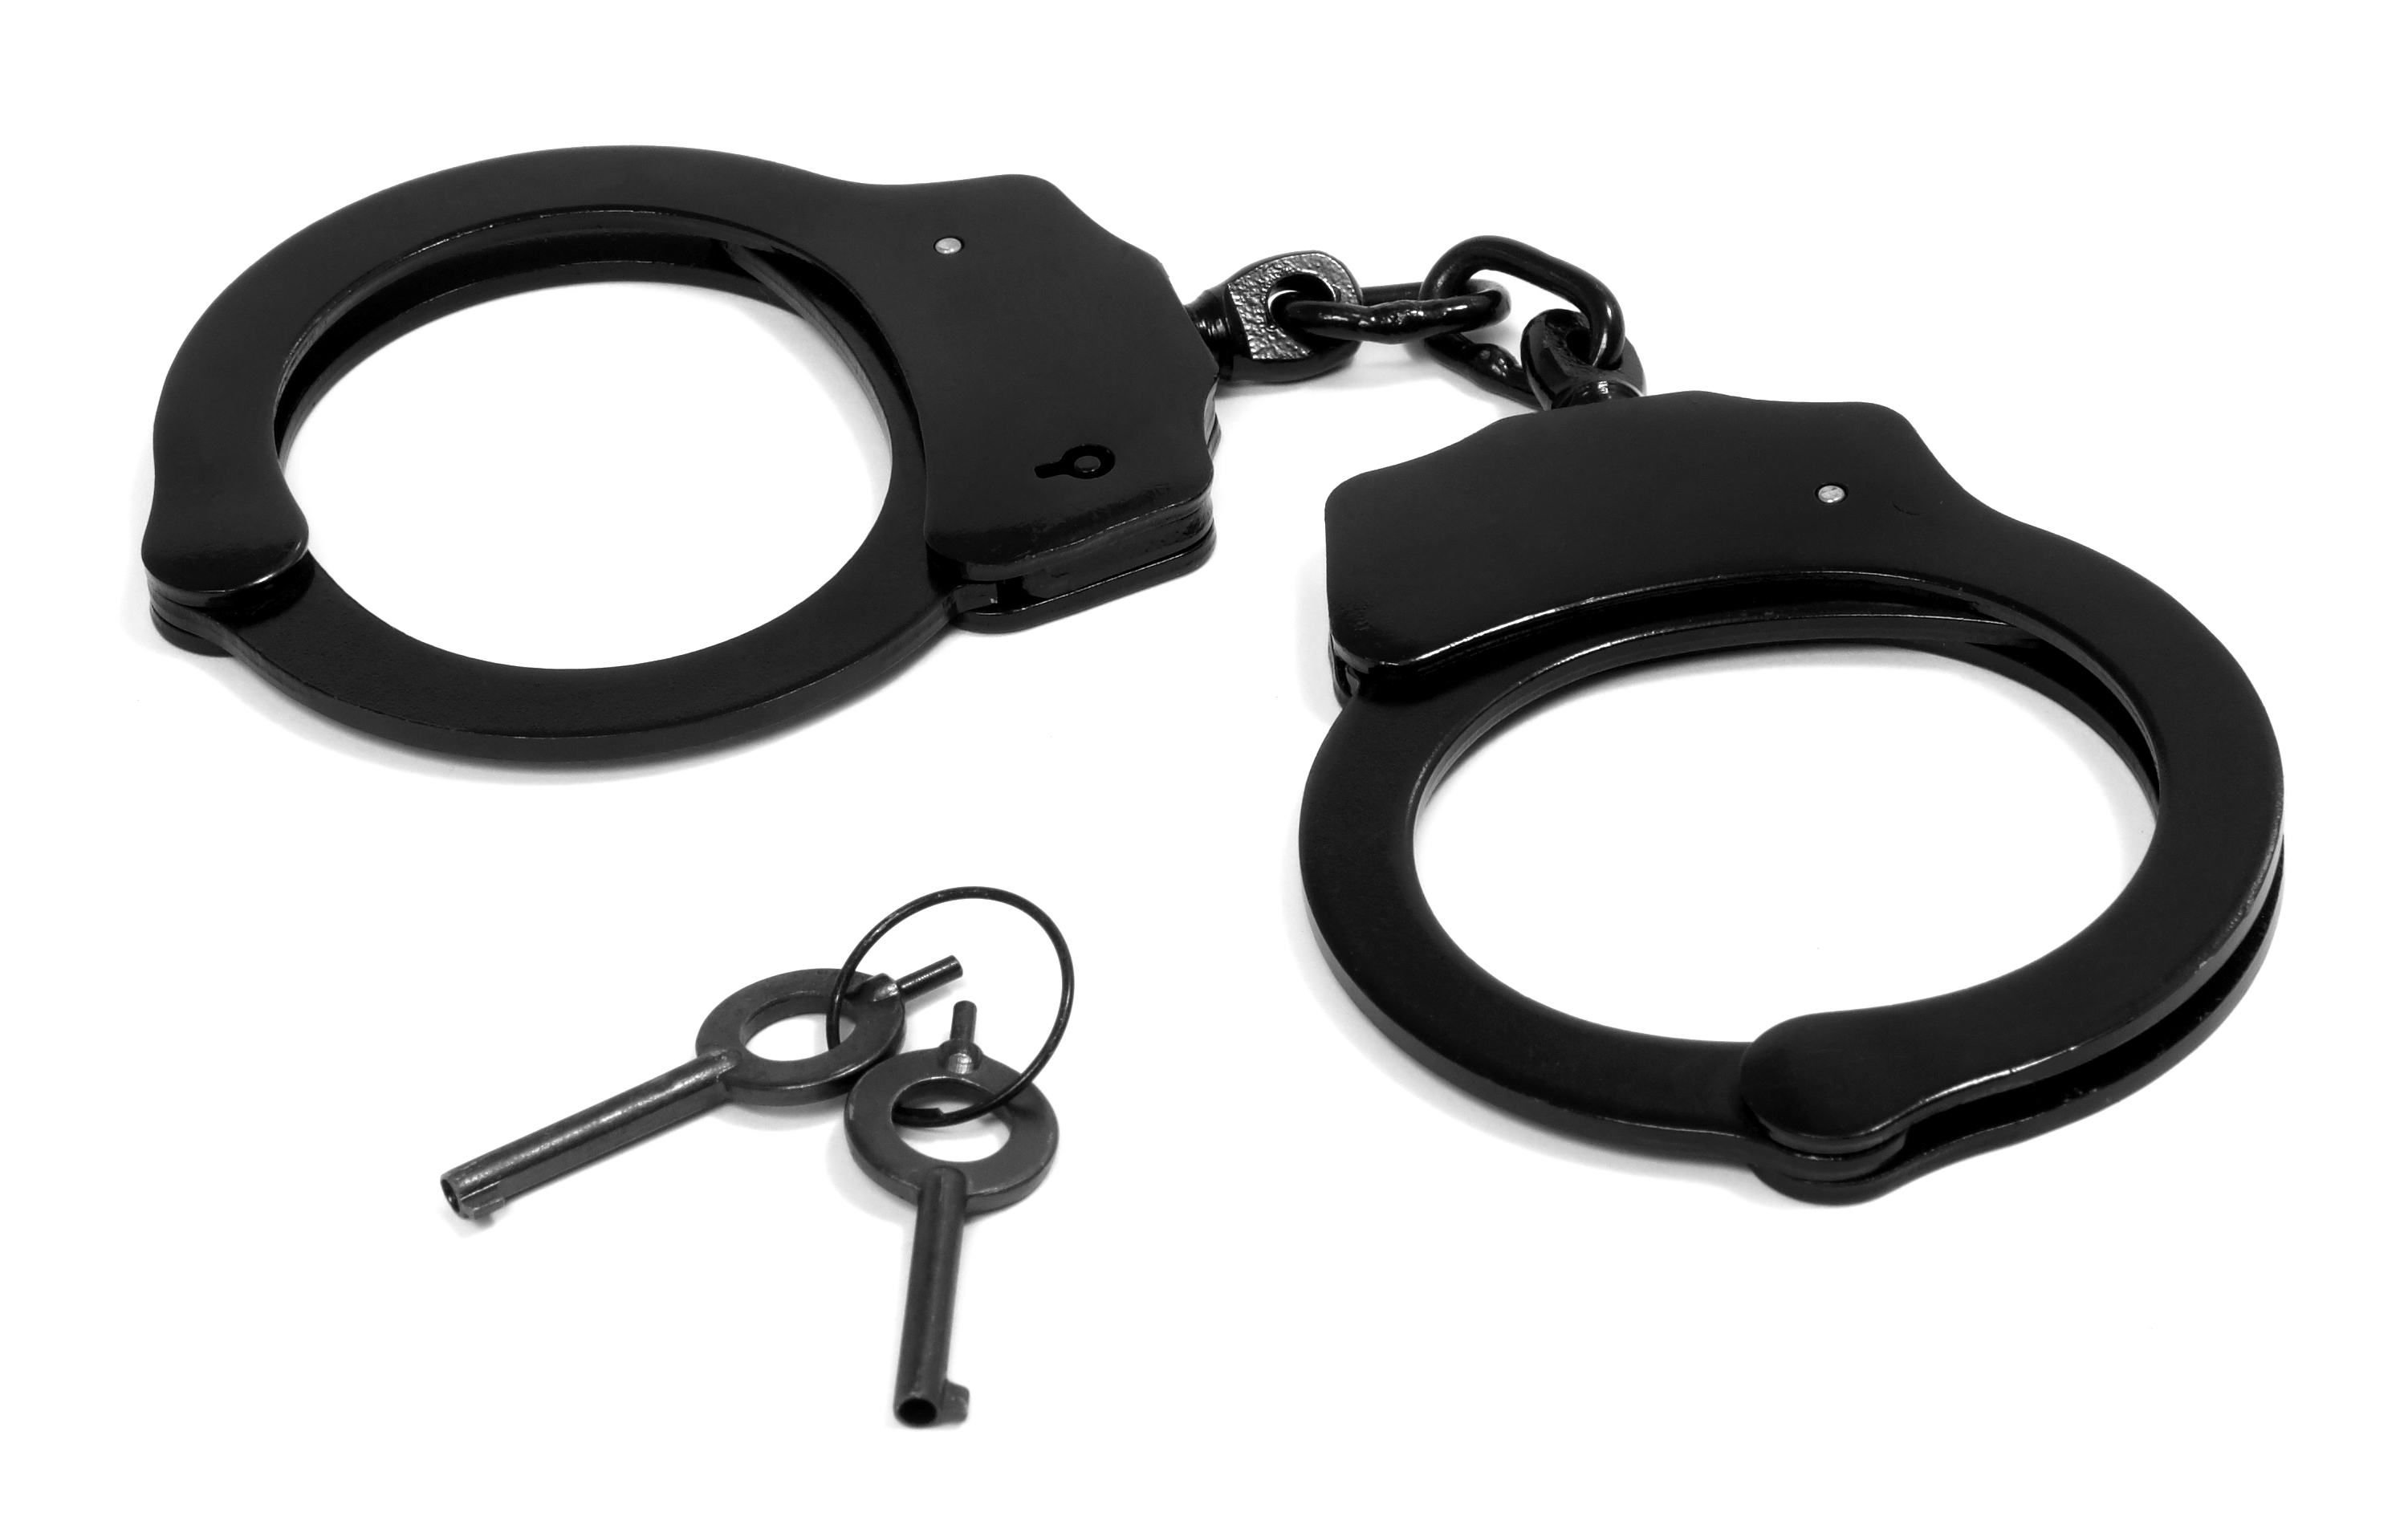 Free Handcuffs Clipart Clip art of Handcuffs Clipart #8351.